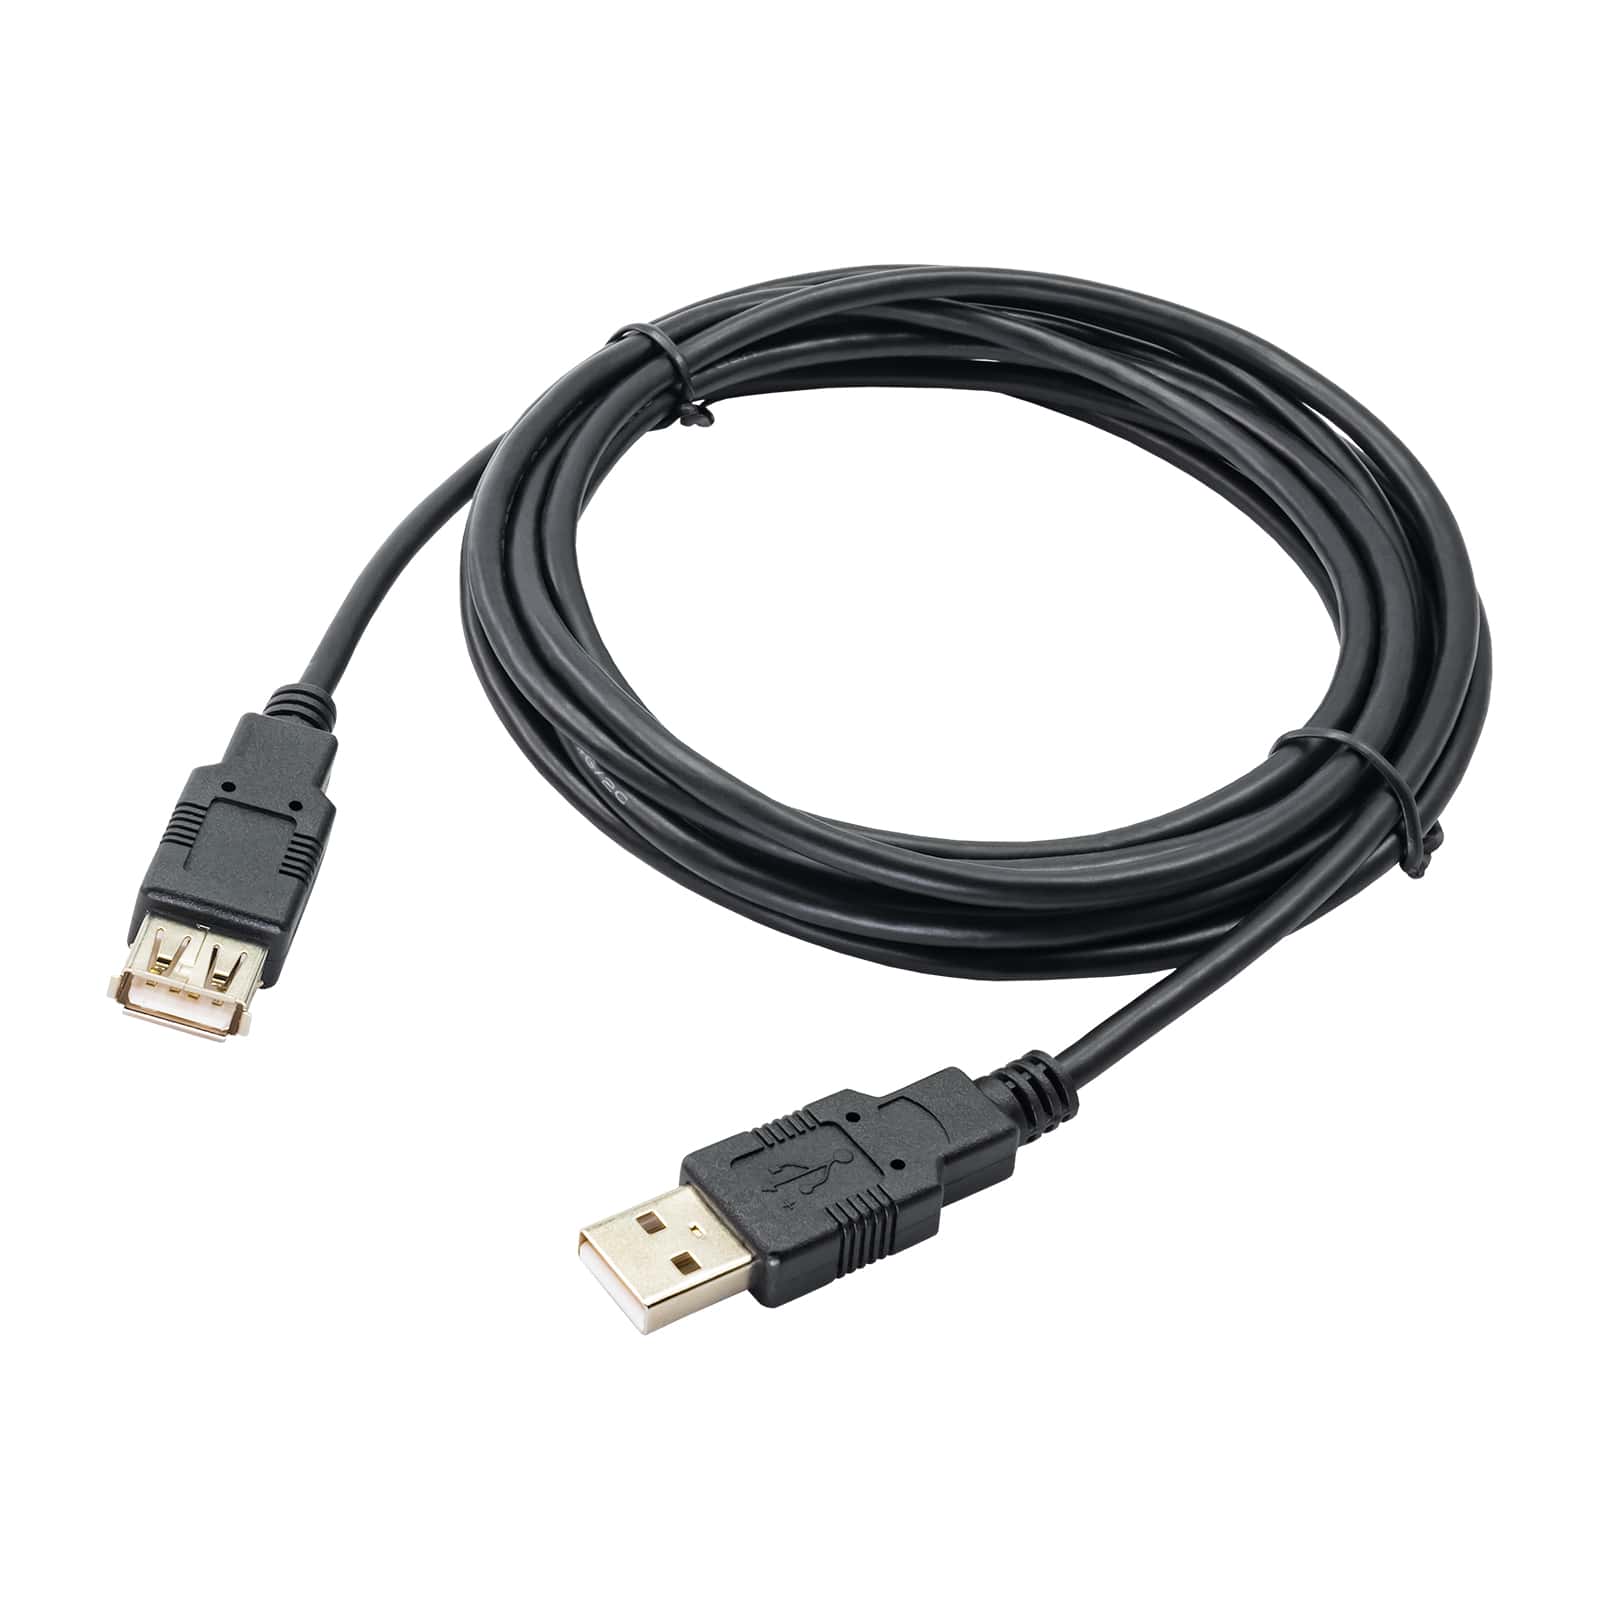 SKU : 30cm USB cables USB Length: 30cm USB 2.0 AM to AF Extension Cable 